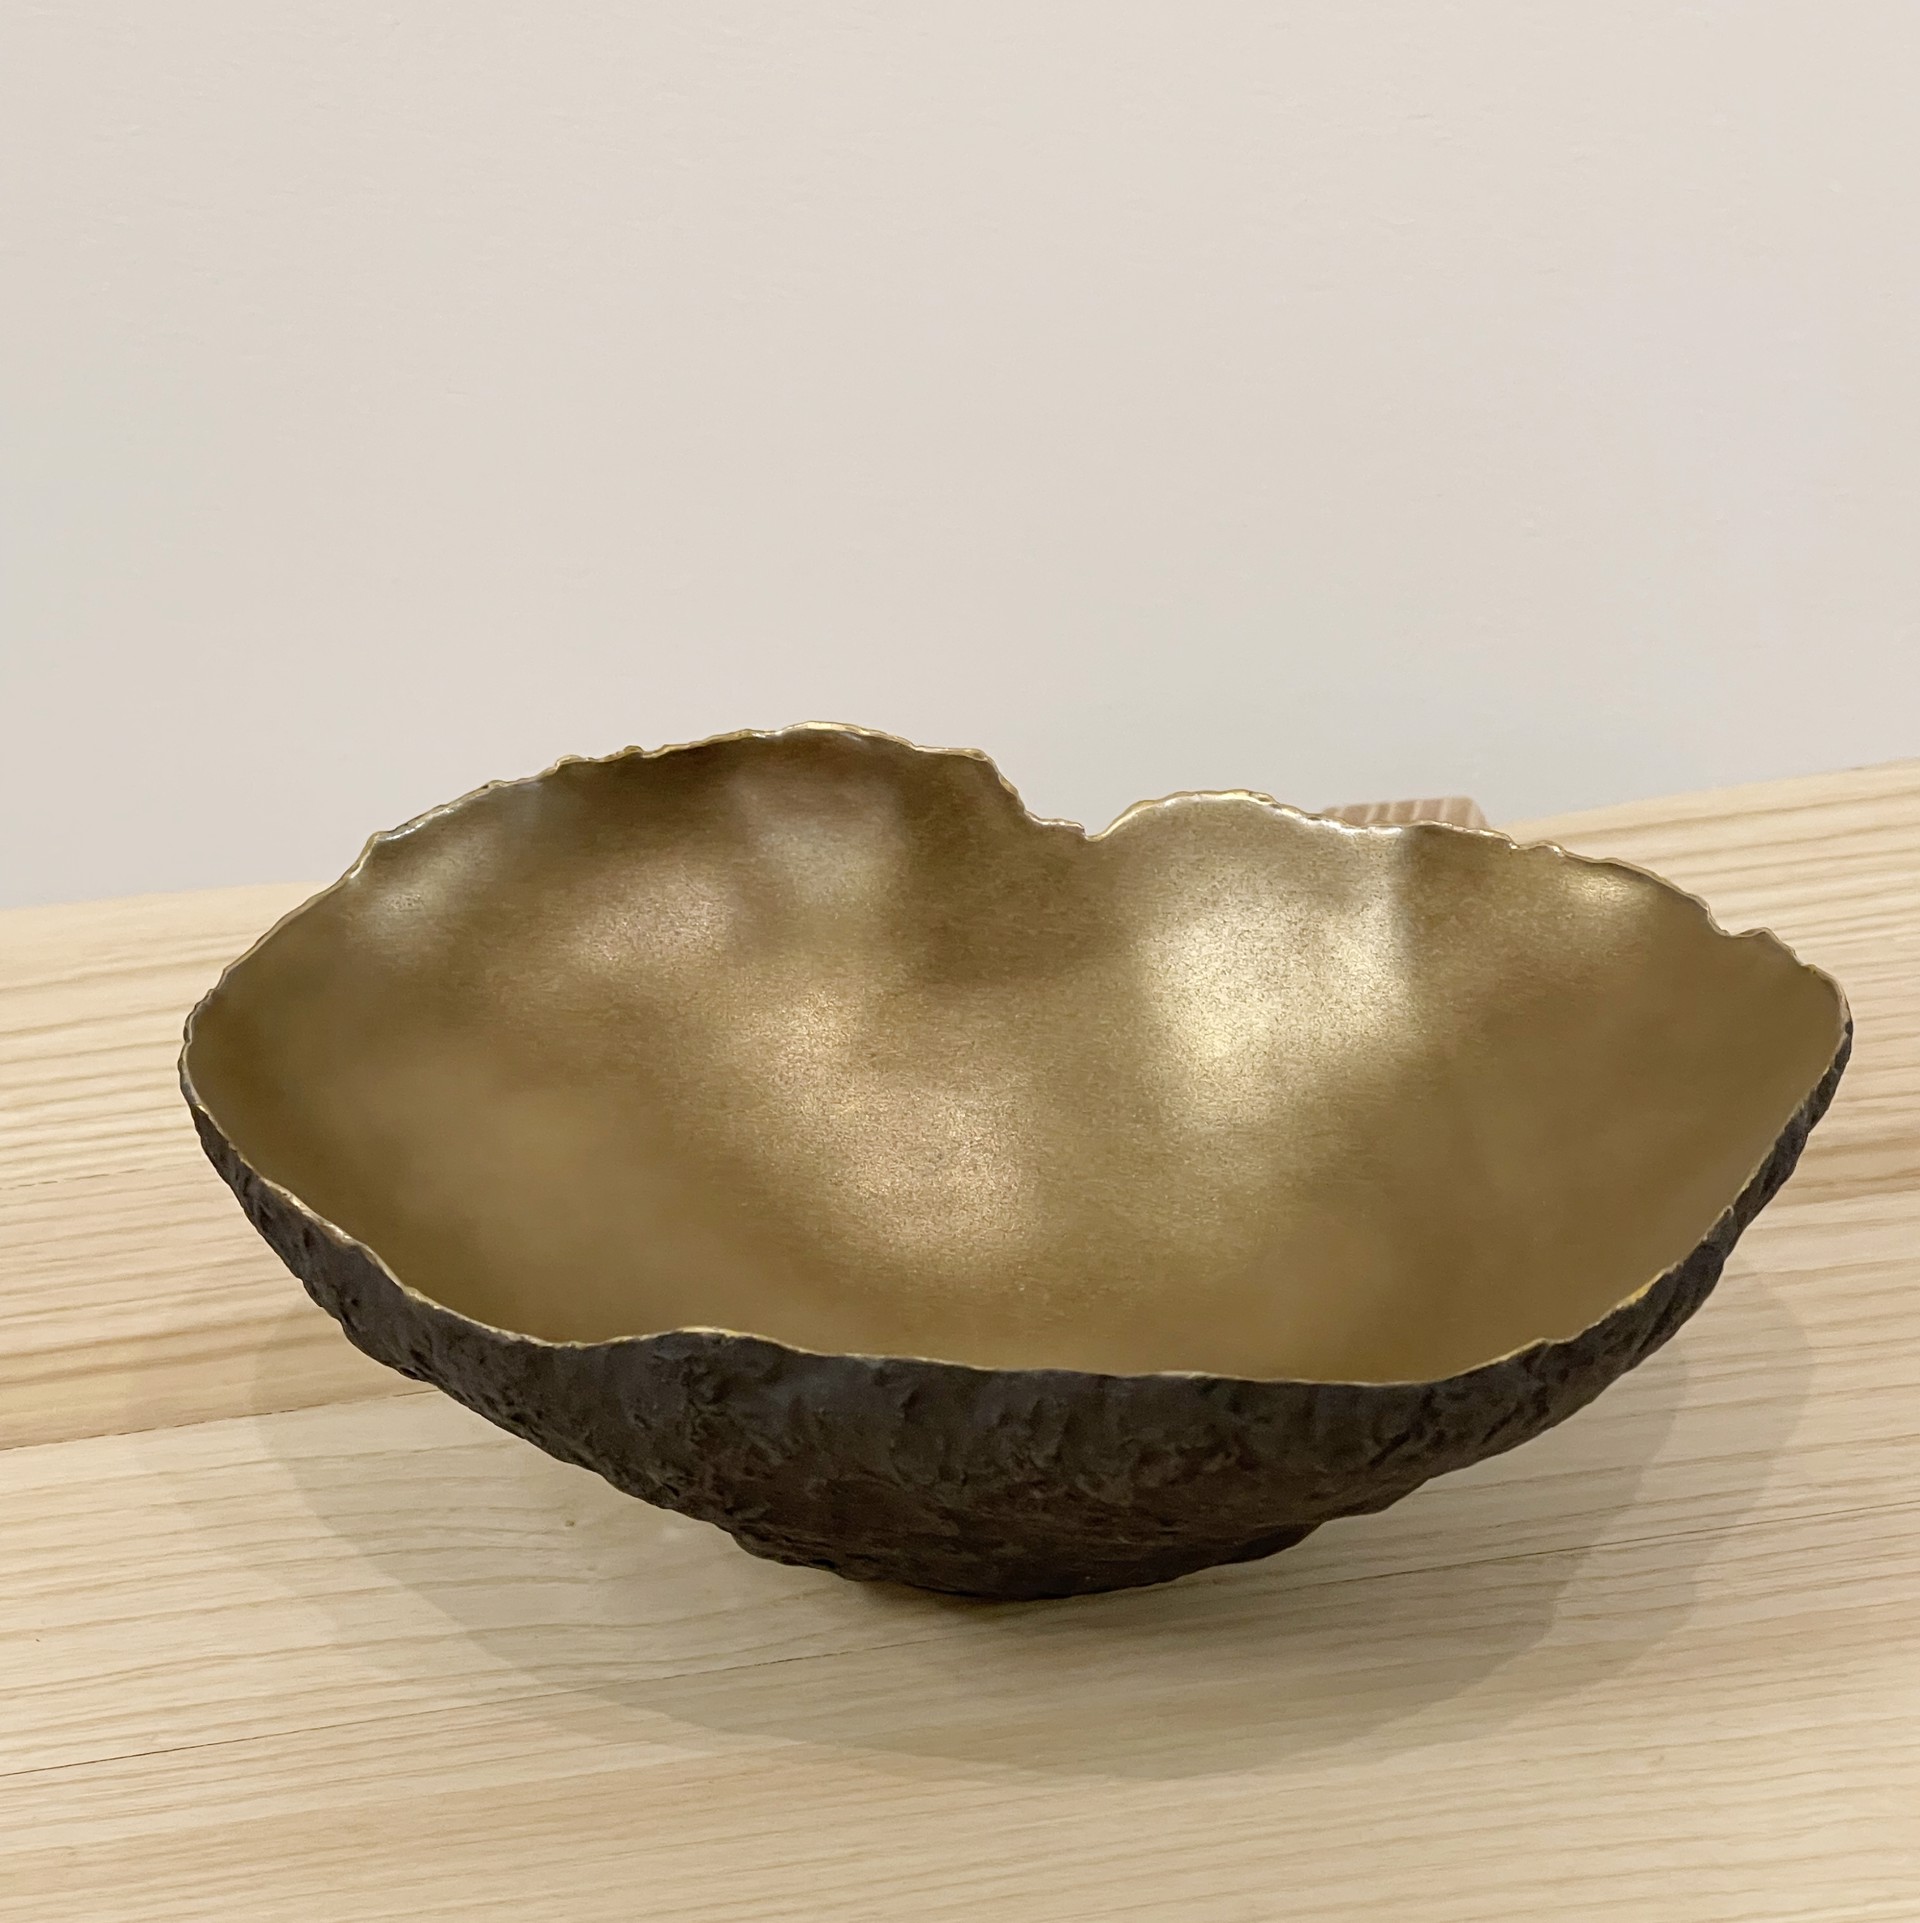 Organic ceramic with bronze glaze by Cristina Salusti